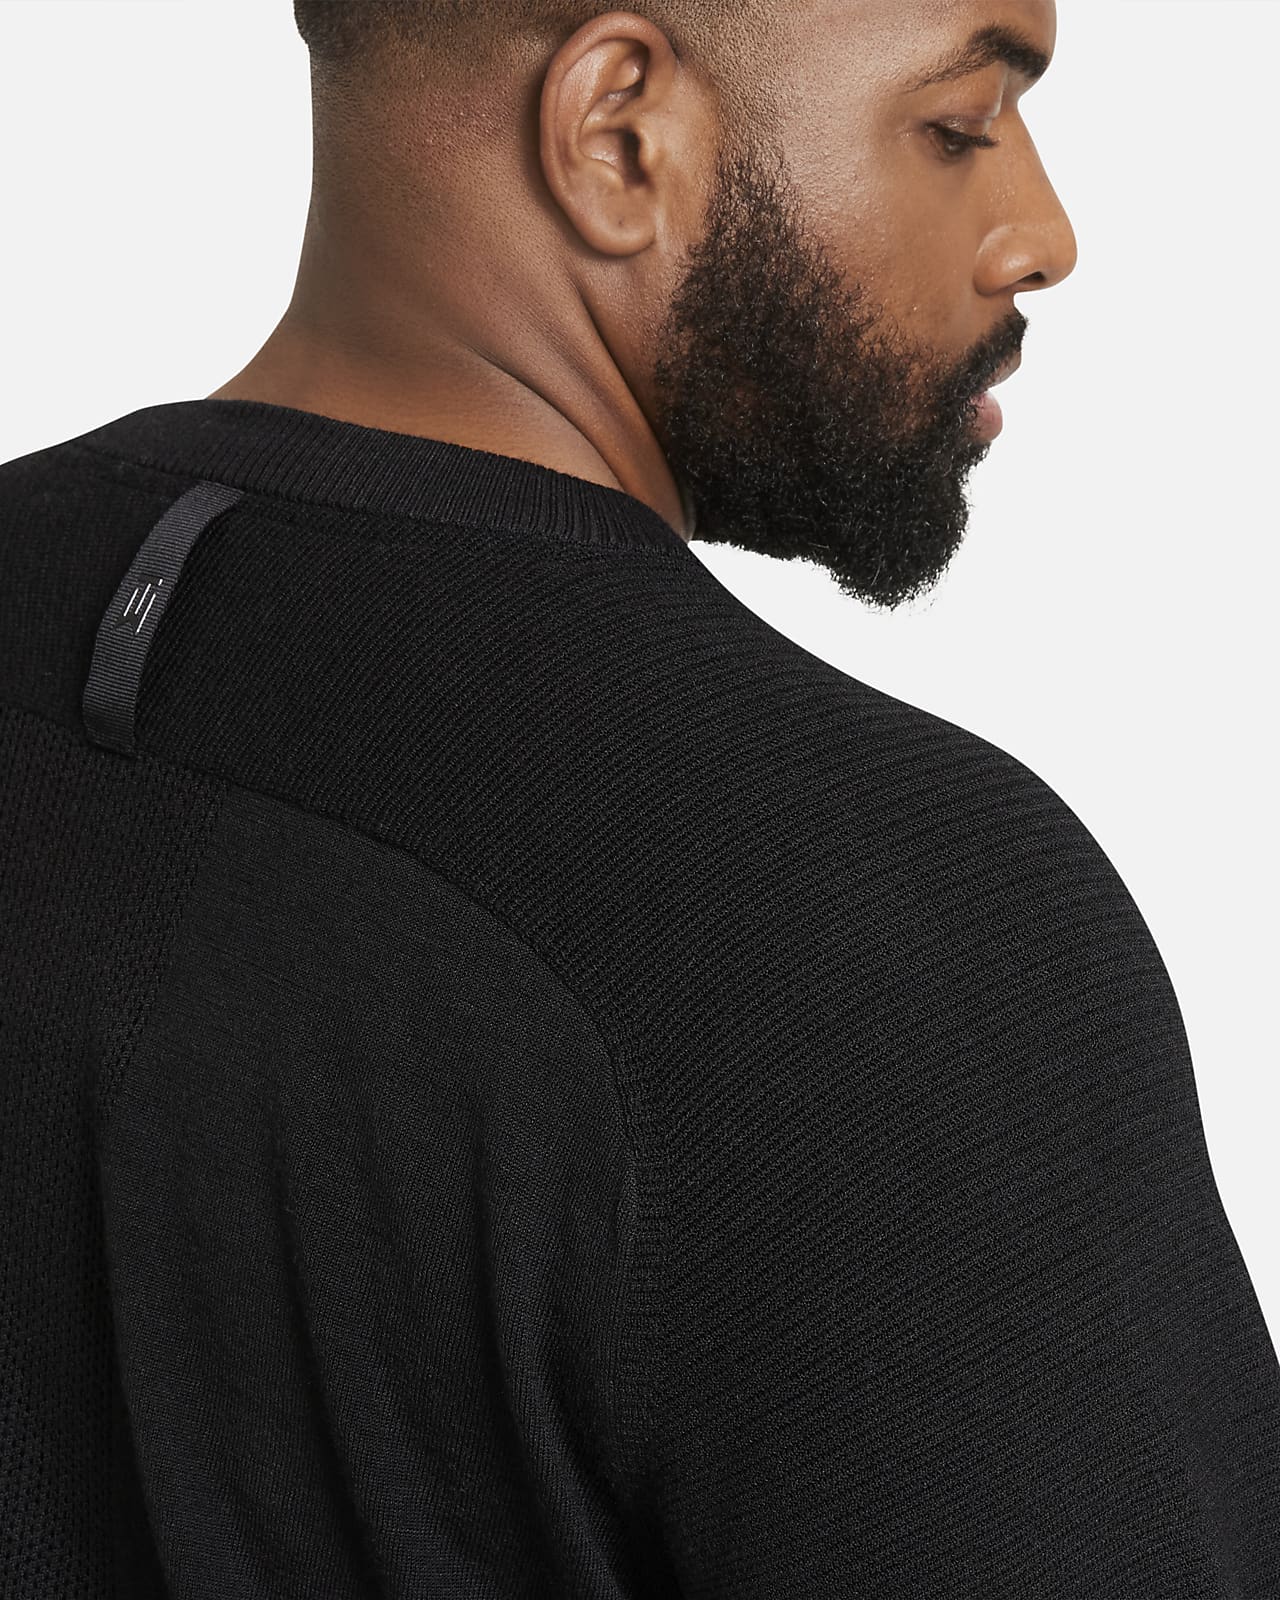 Tiger Woods Men's Knit Golf Sweater. Nike.com